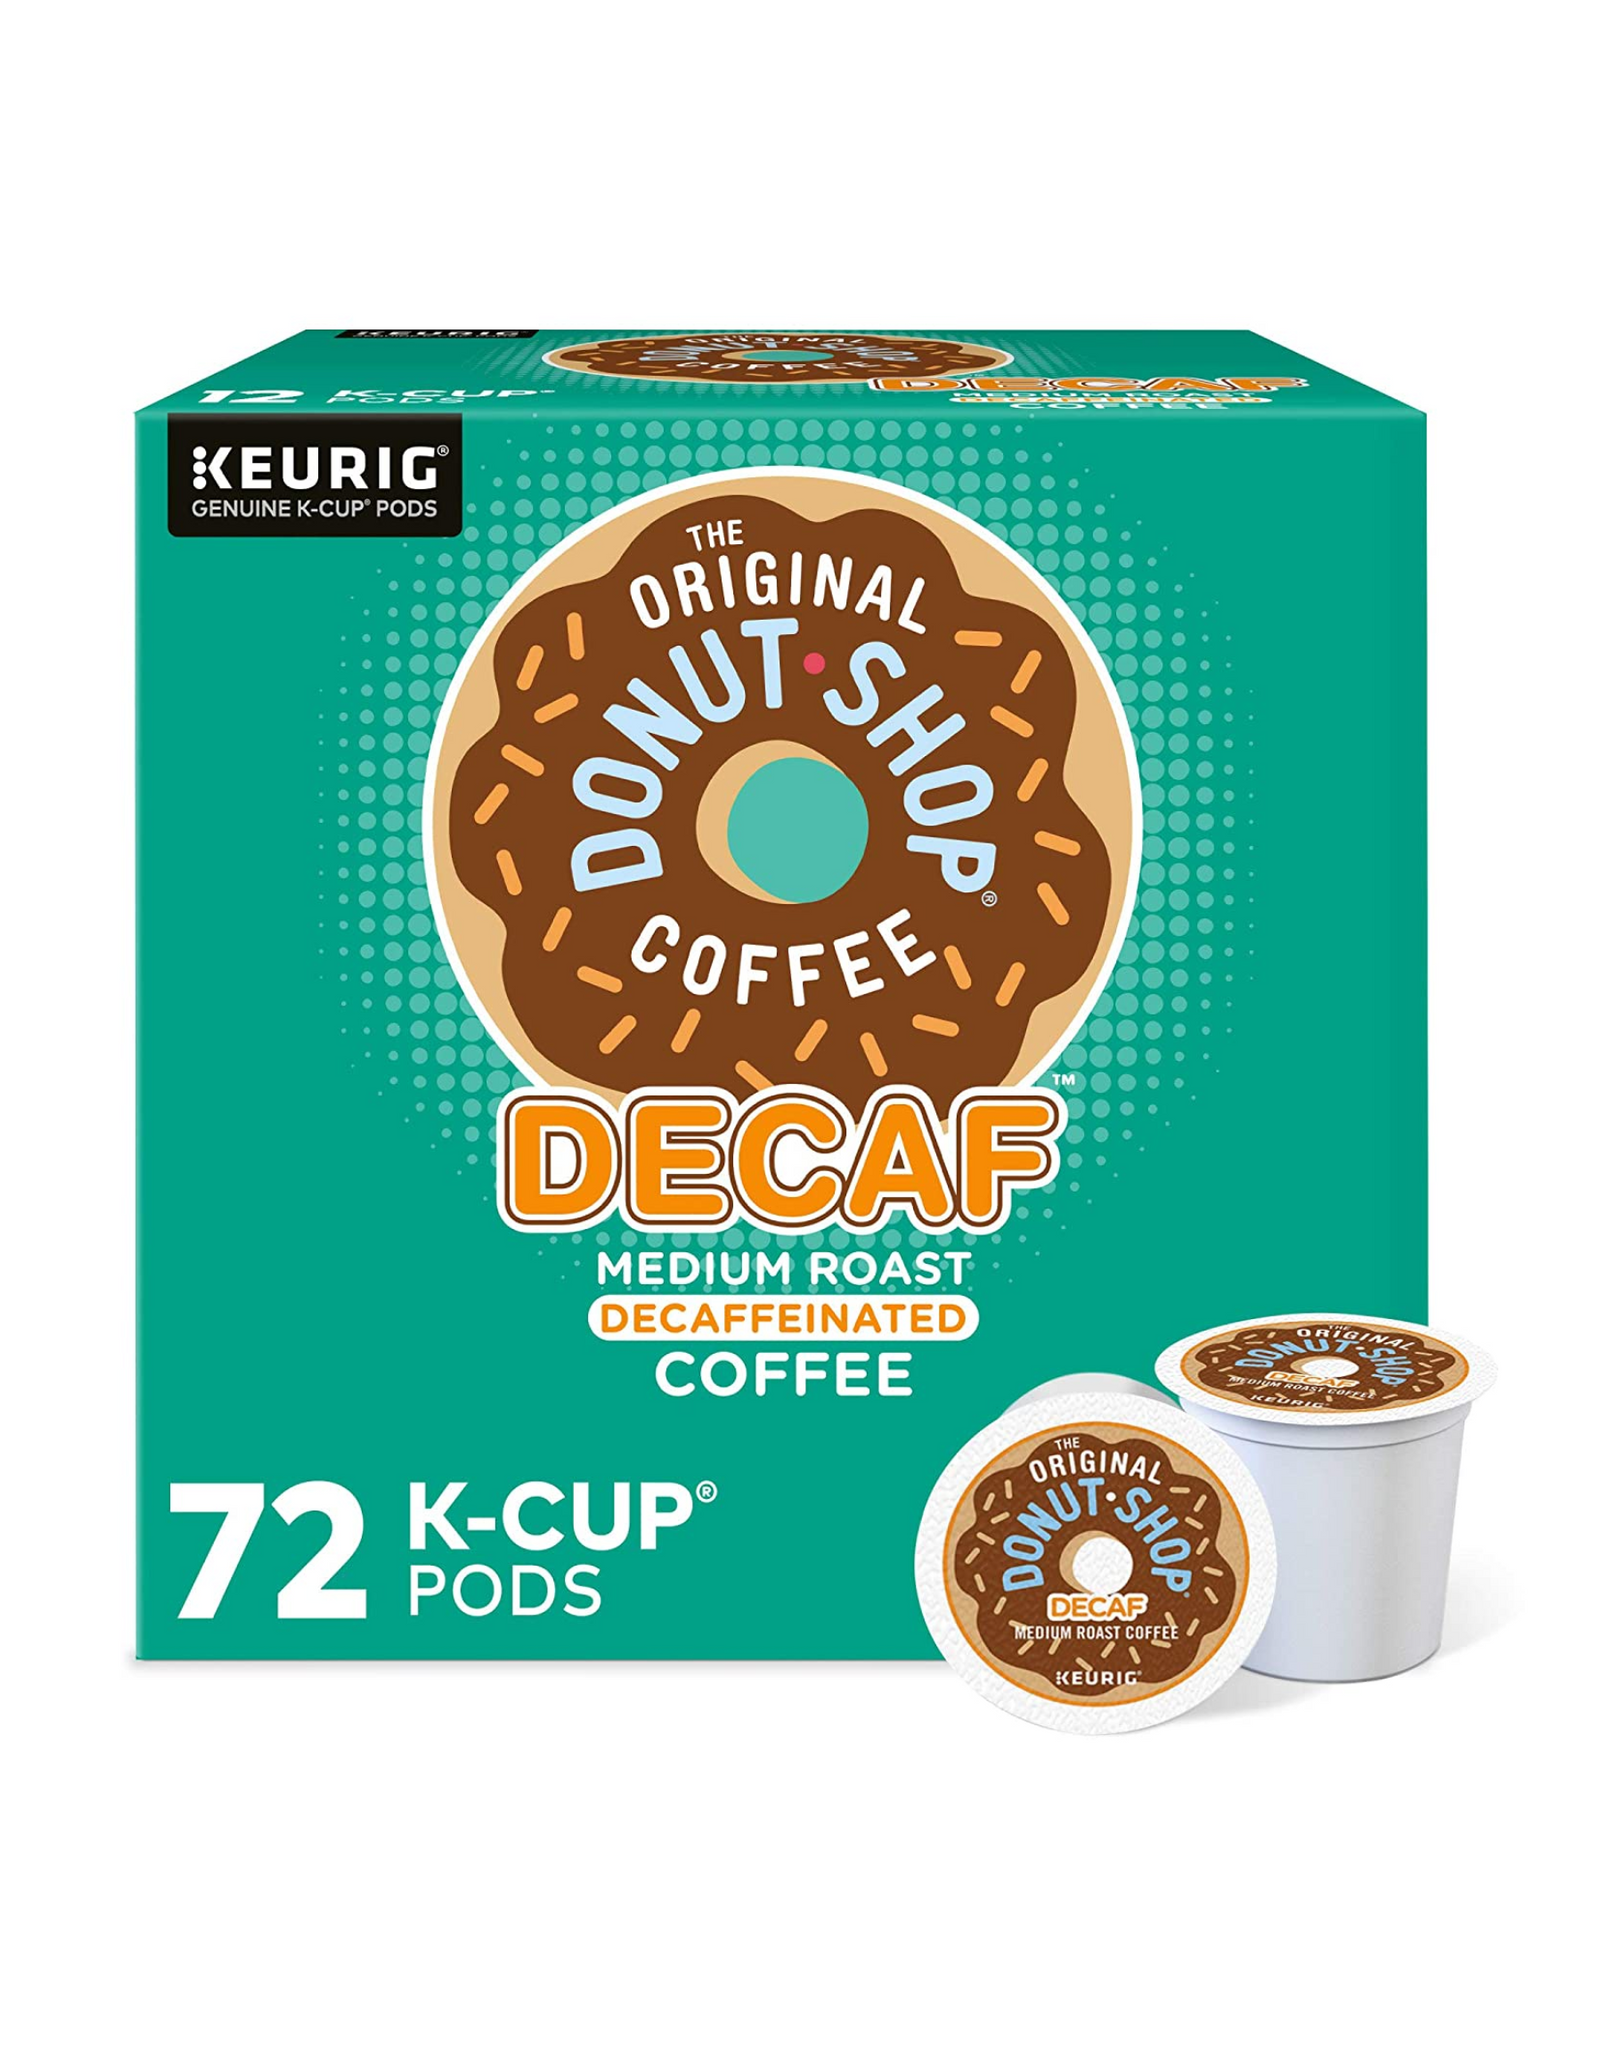 The Original Donut Shop Decaf K-Cup Pods, Medium Roast Coffee, 72 Count